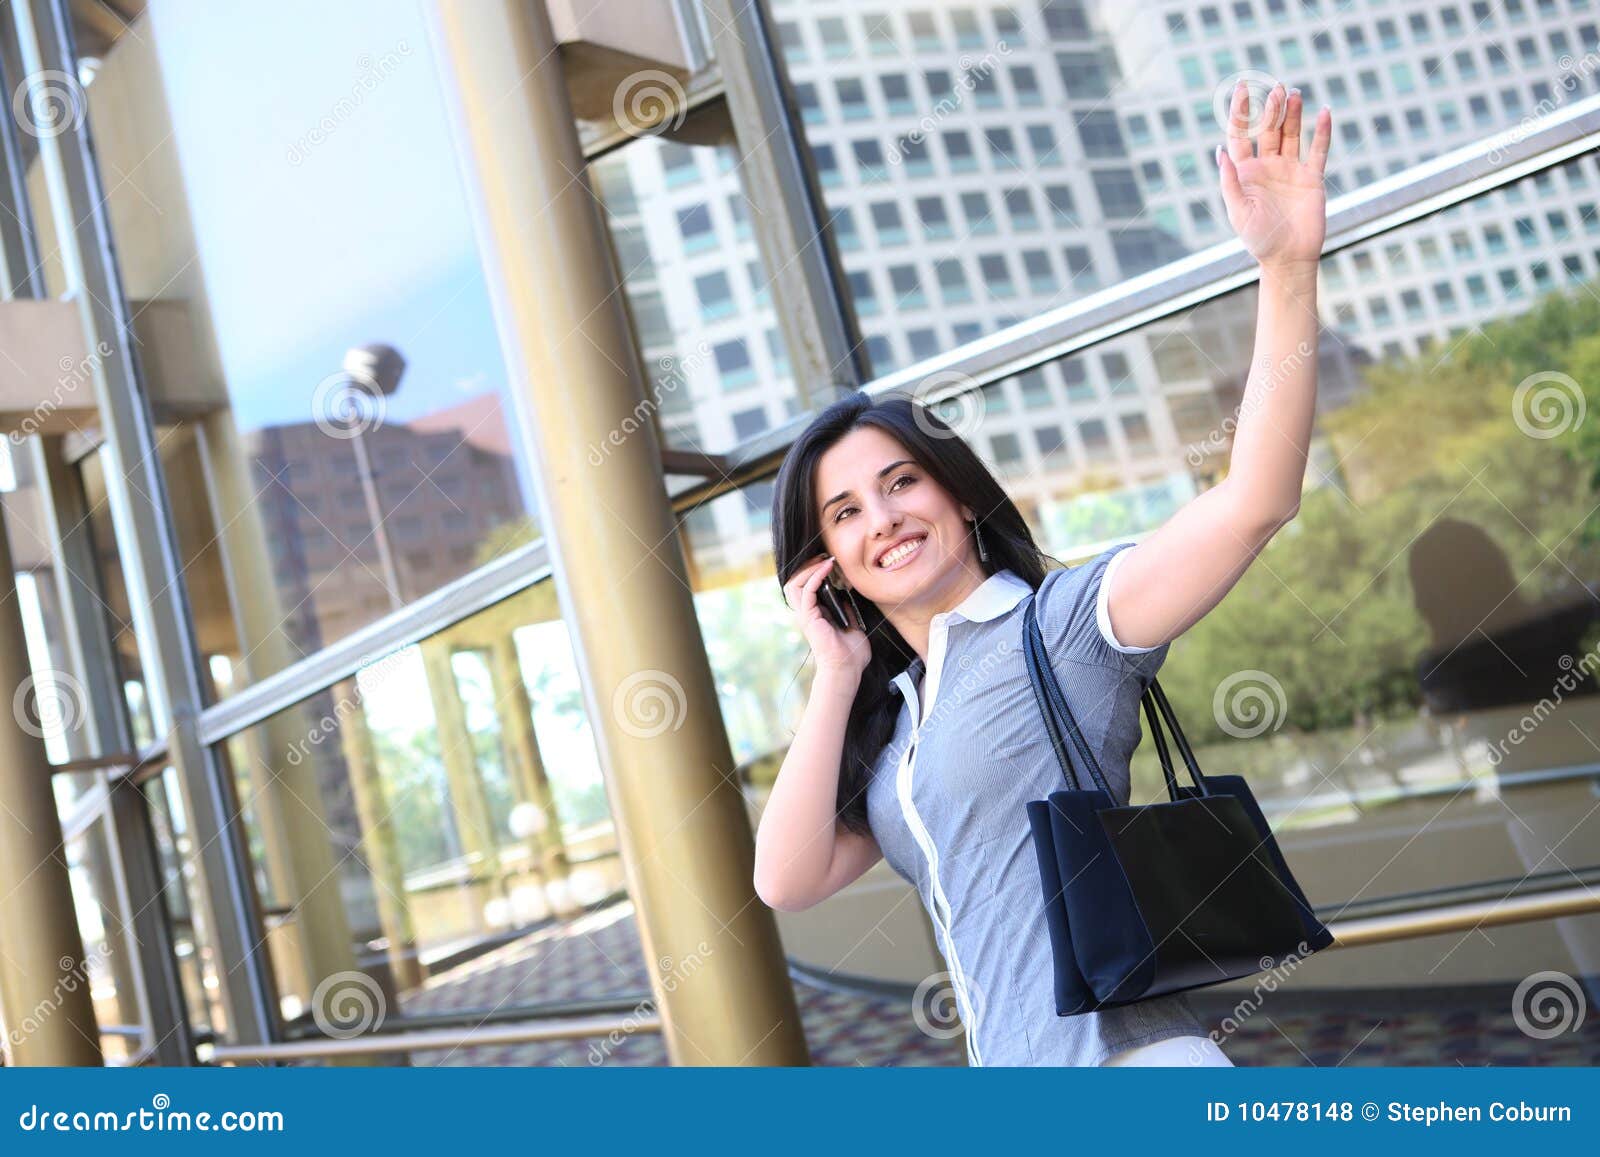 business woman waving goodbye